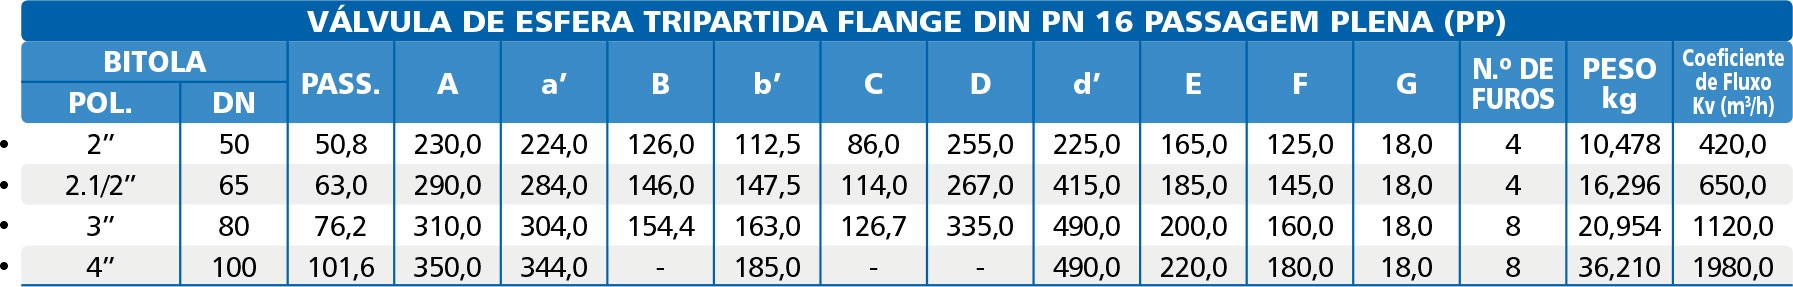 Valvula-de-Esfera-Tripartida-Serie-1000-Flange-DIN-PN16-tabela